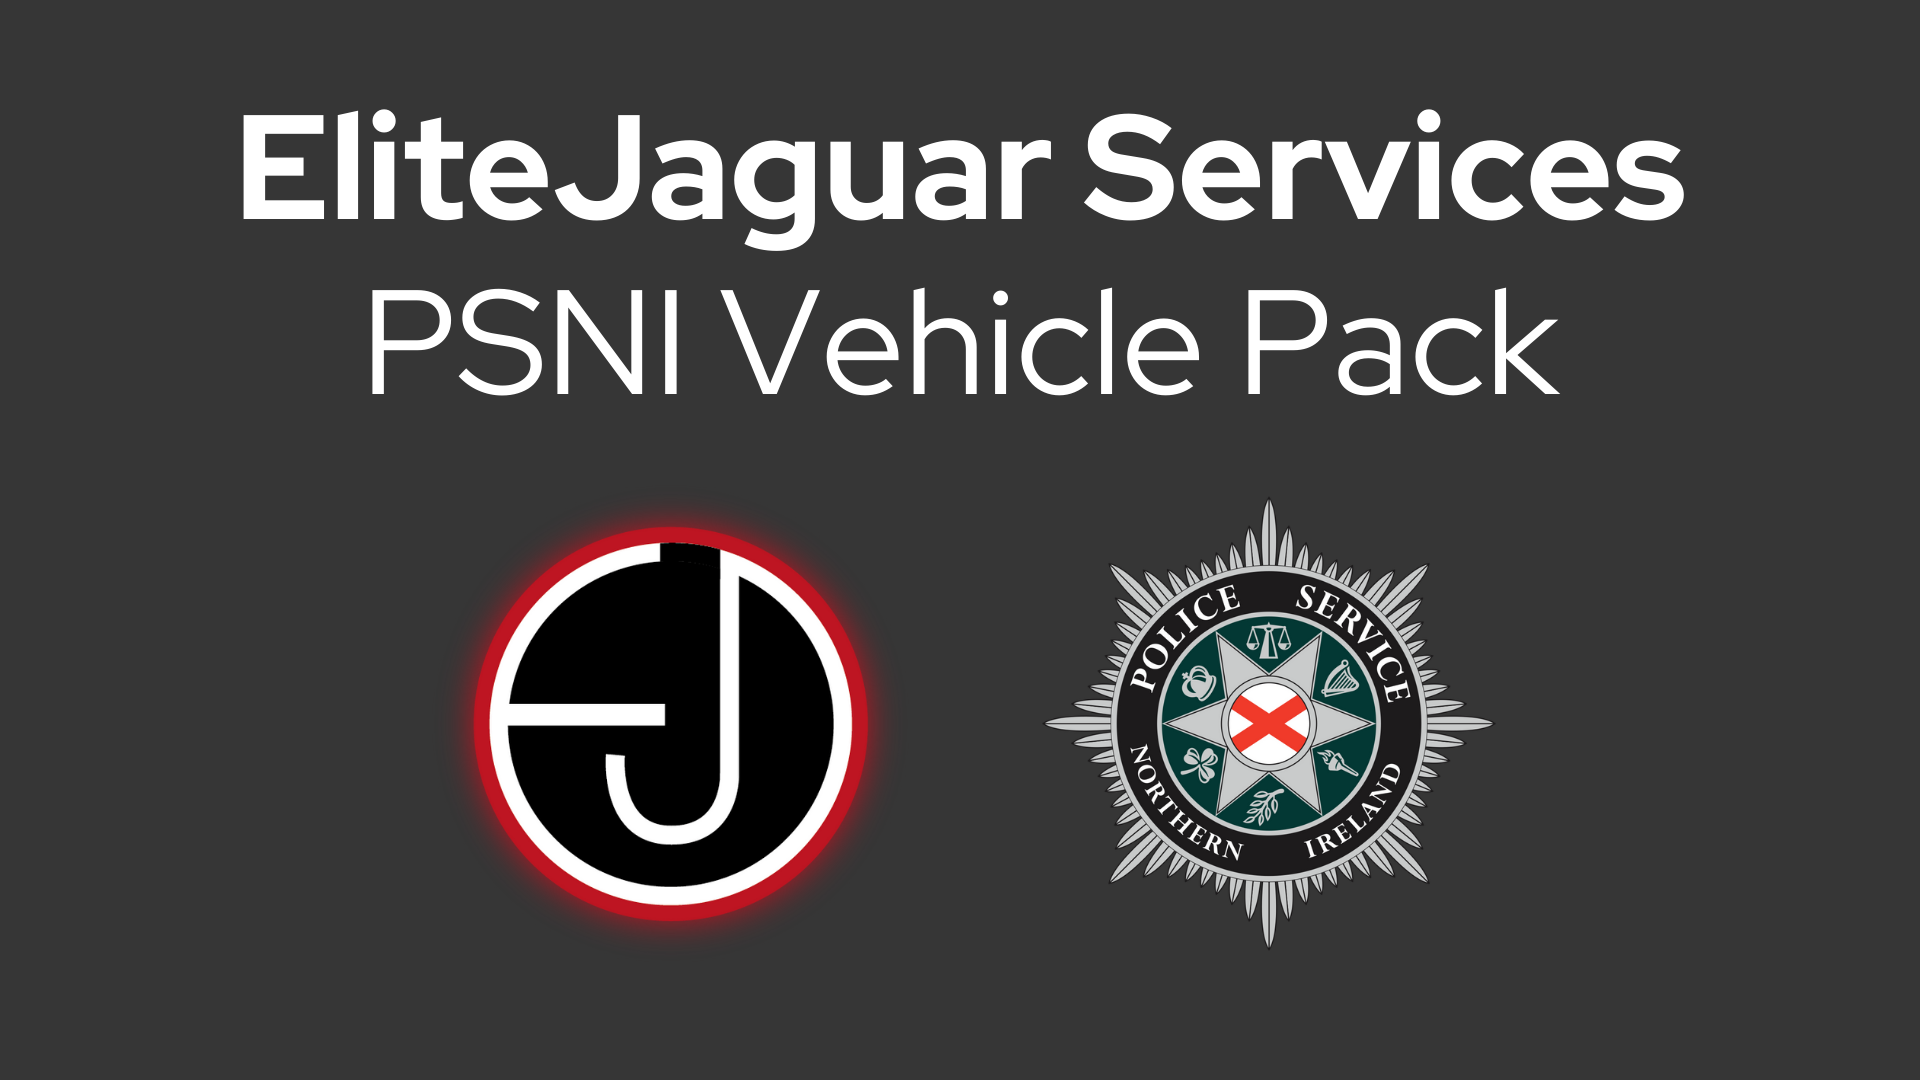 PSNI Vehicle Pack